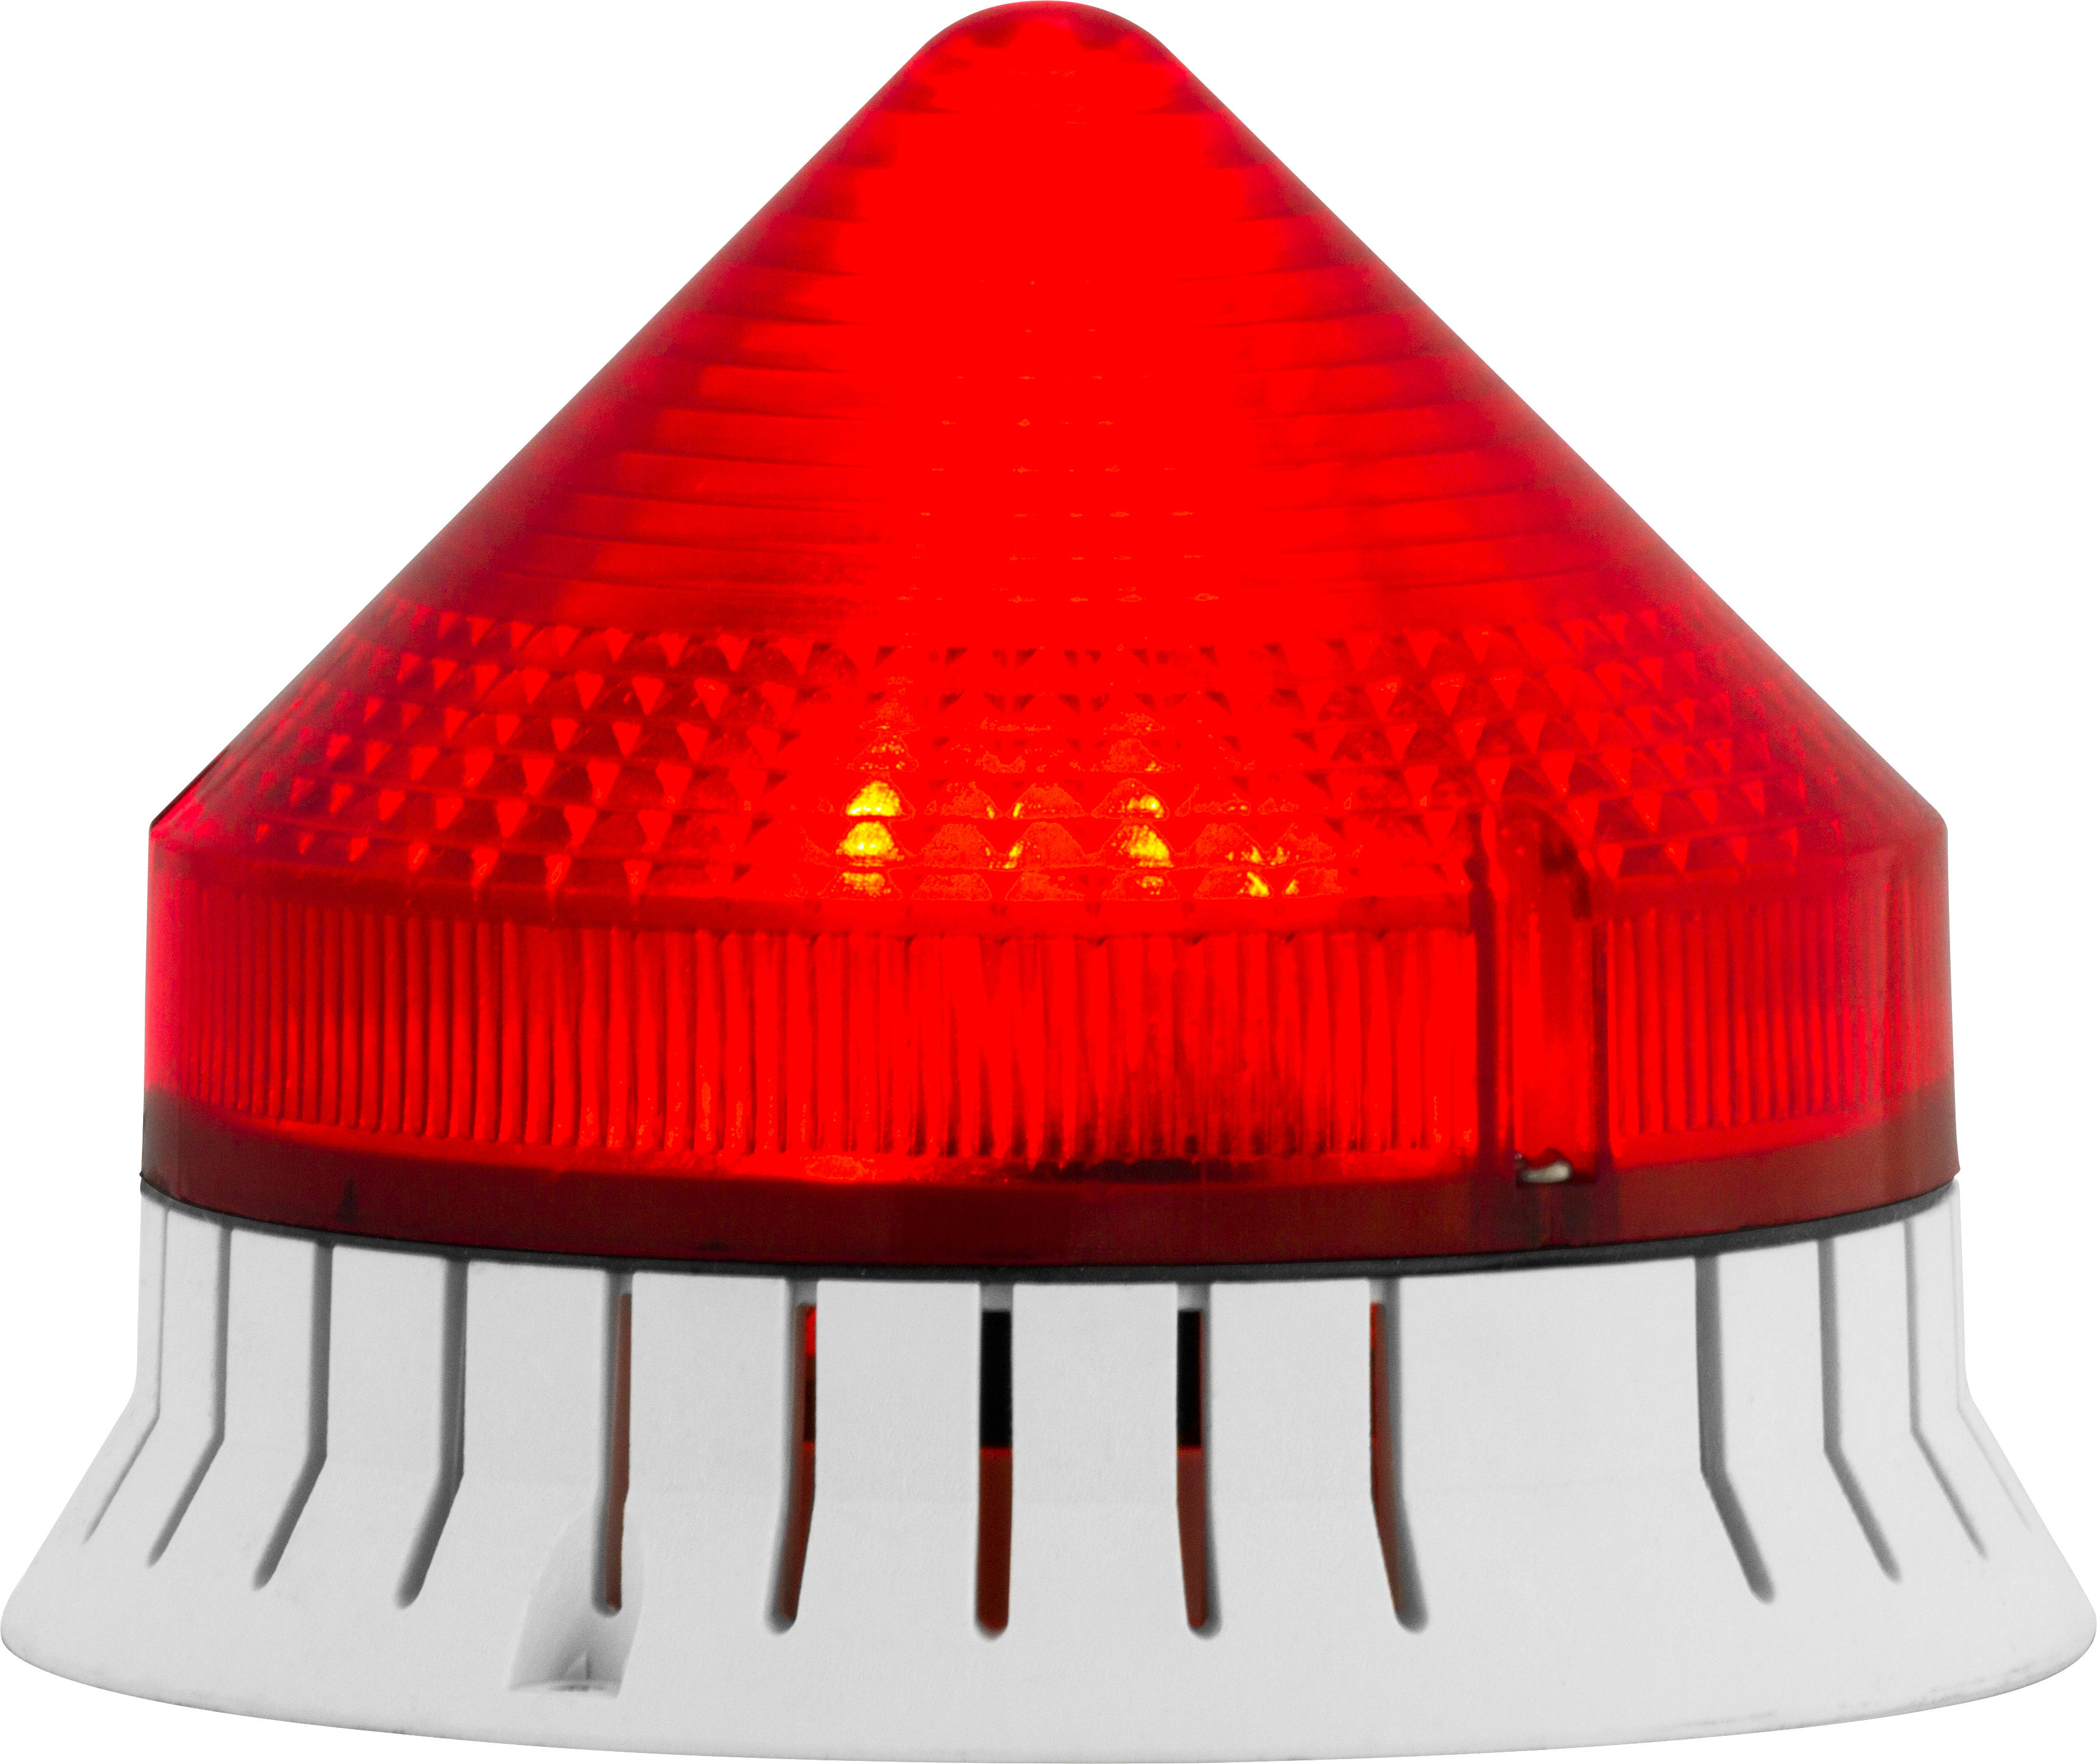 SIRENA - Acoustique rouge fixe/clignotant son continu/pulsé 74db IP30  diam 120mm